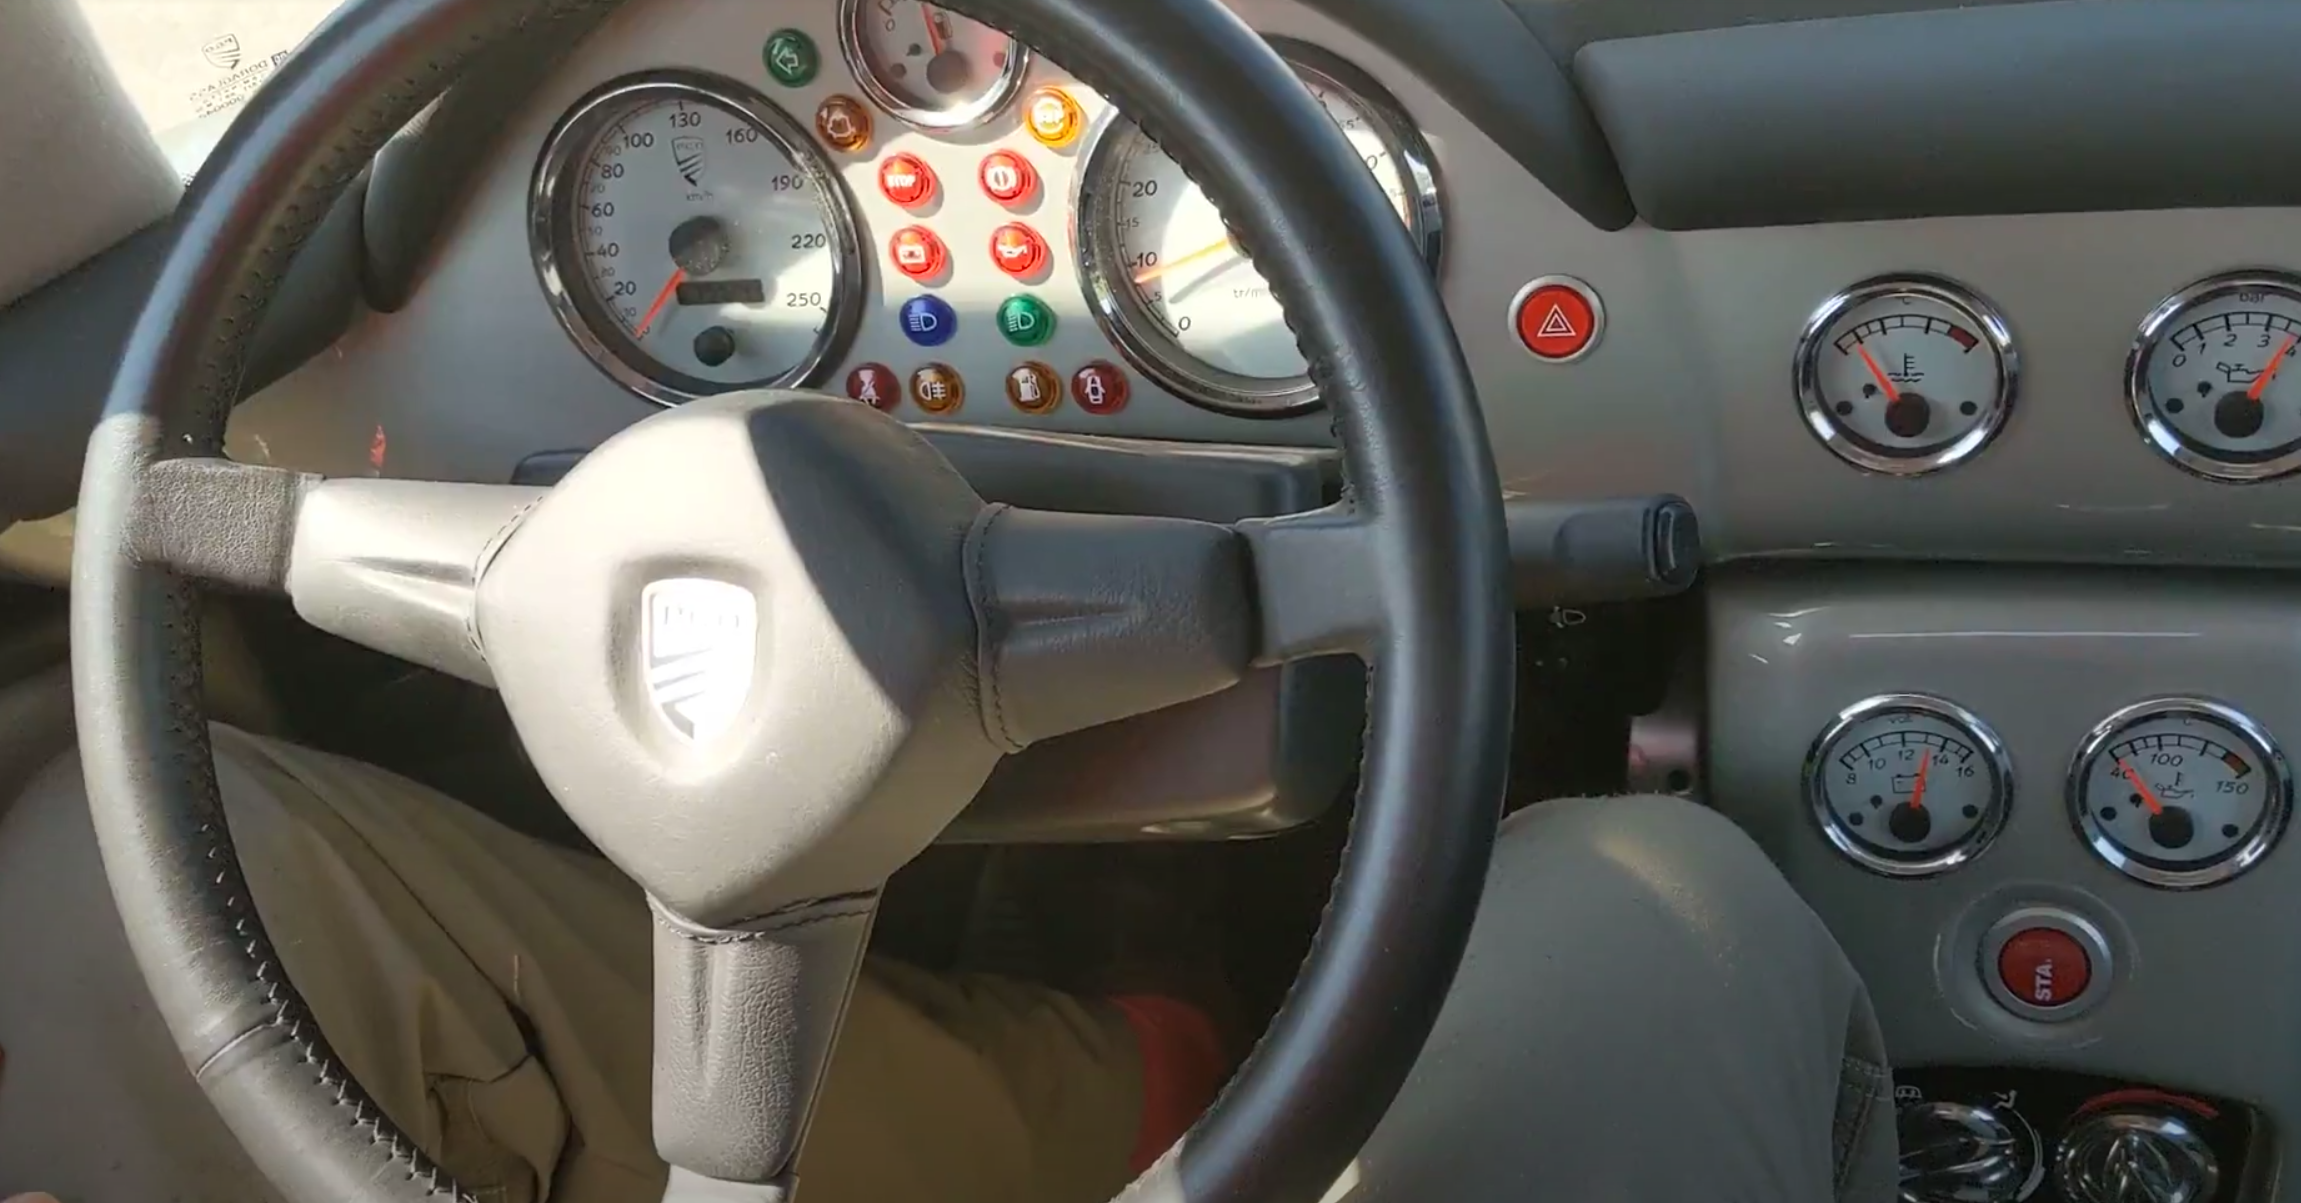 The cockpit of the PGO Hemera for RiversCars.com